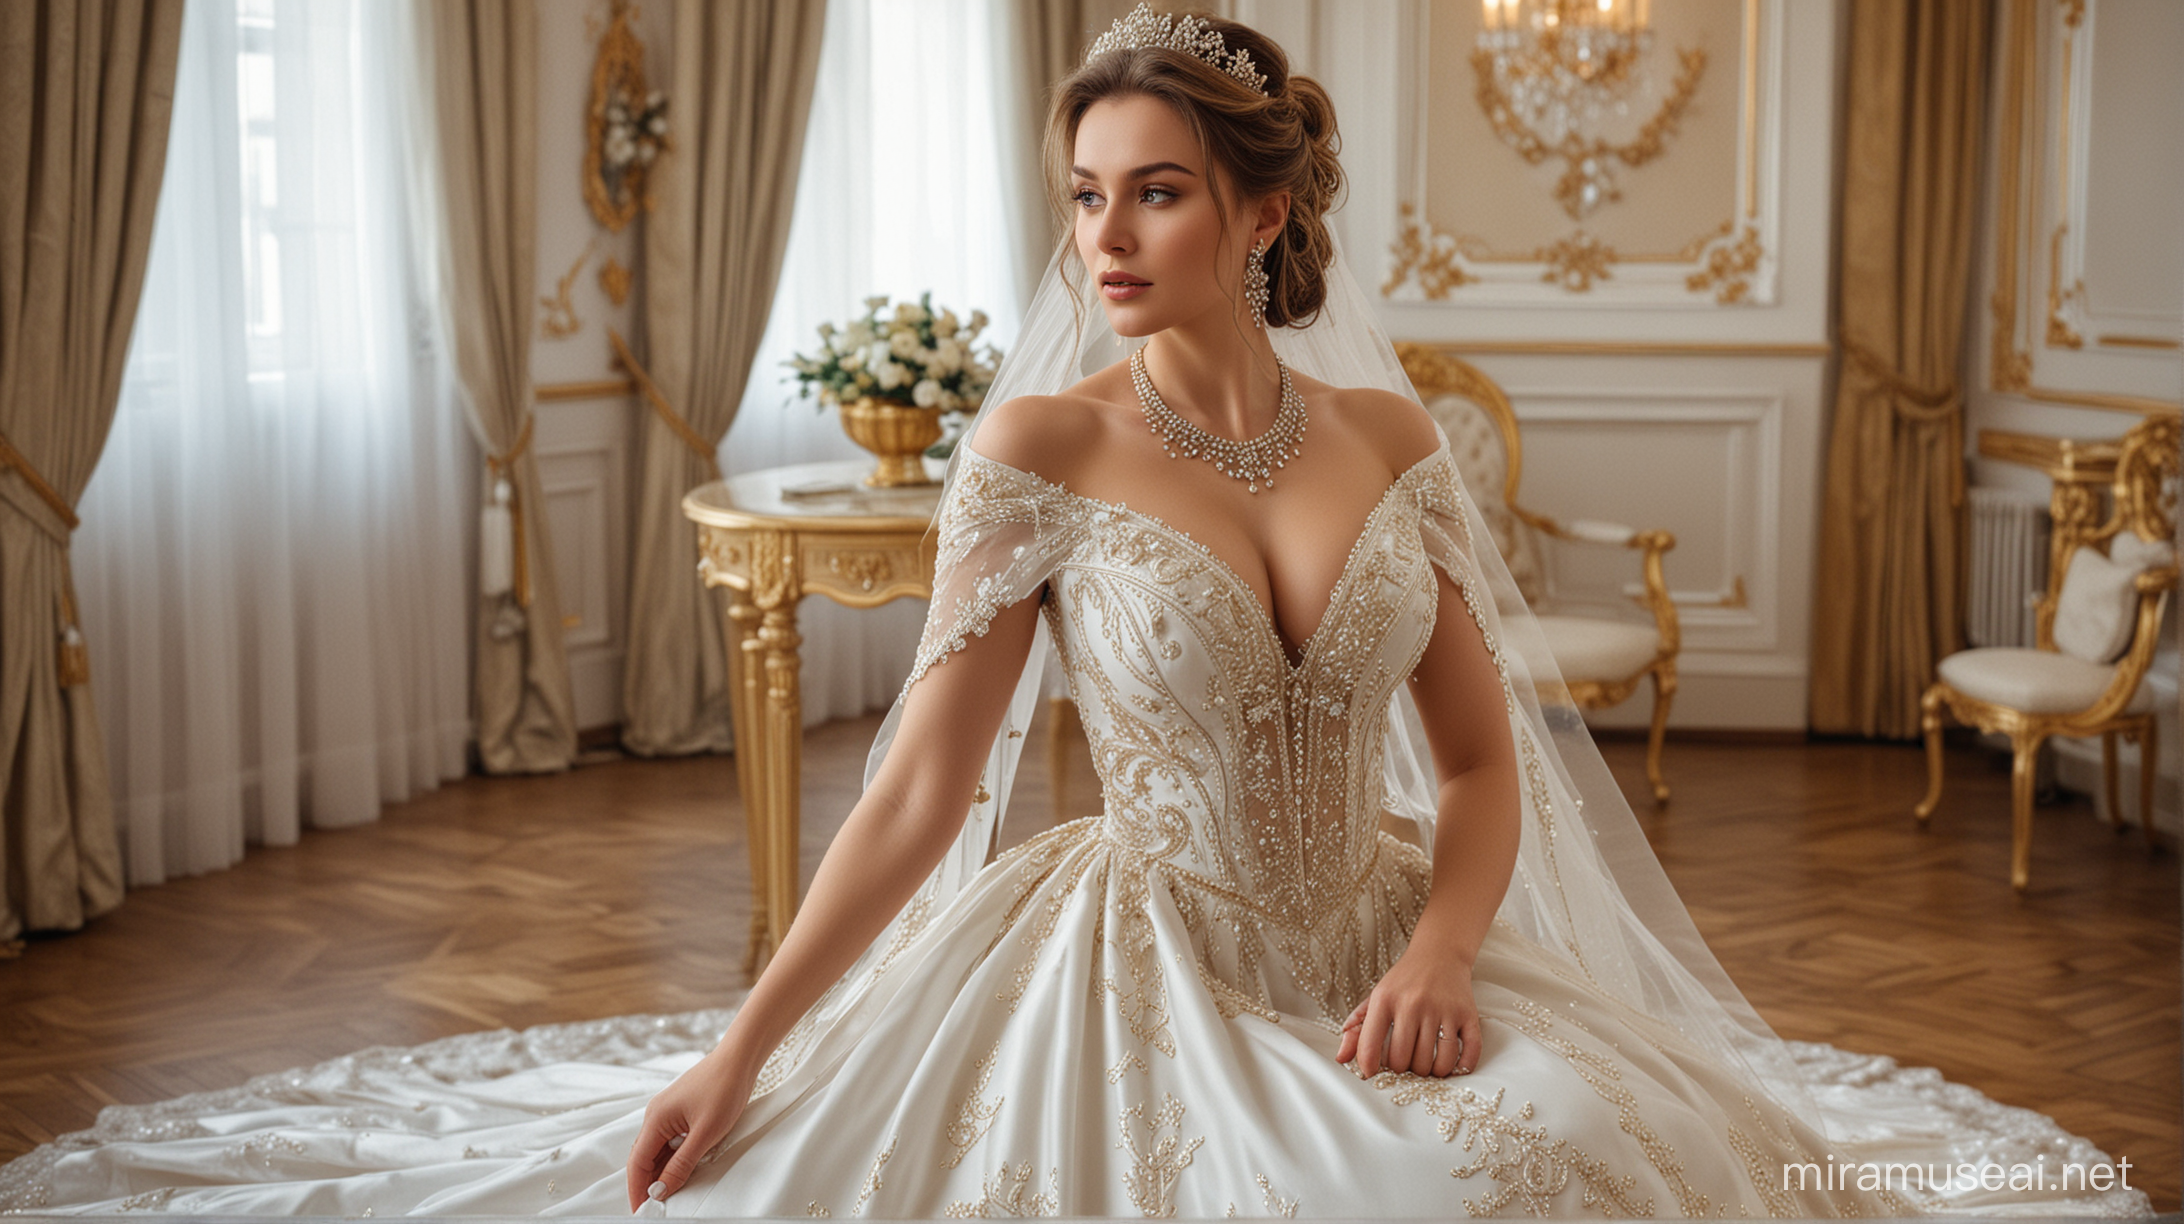 Elegant Ukraine Bride Admiring Stunning Wedding Gown and Jewelry